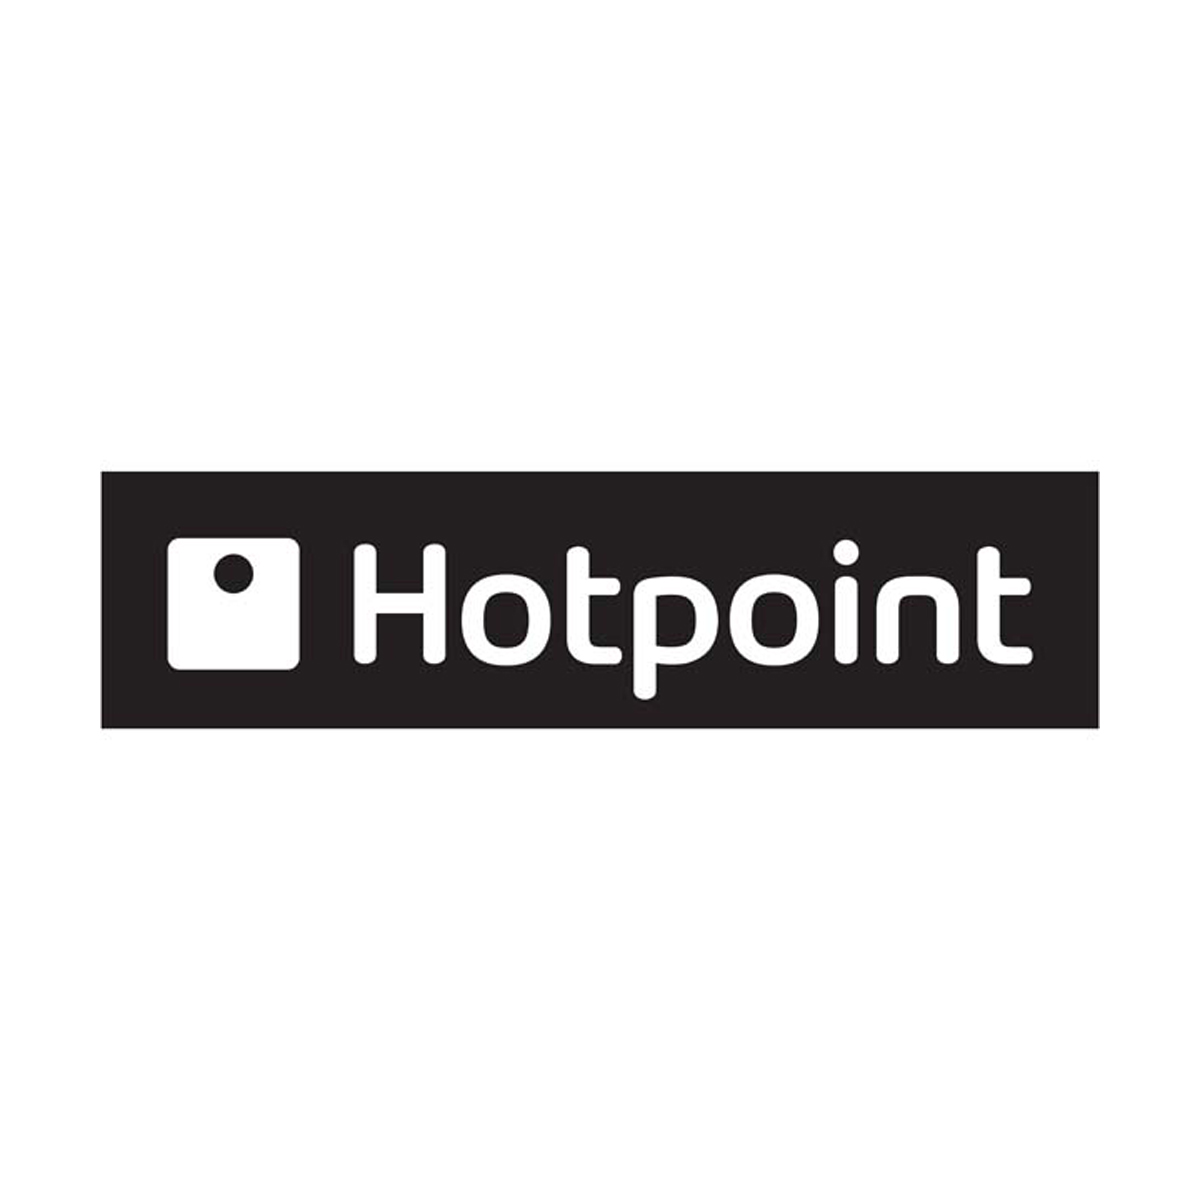 Hotpoint Logo photo - 1